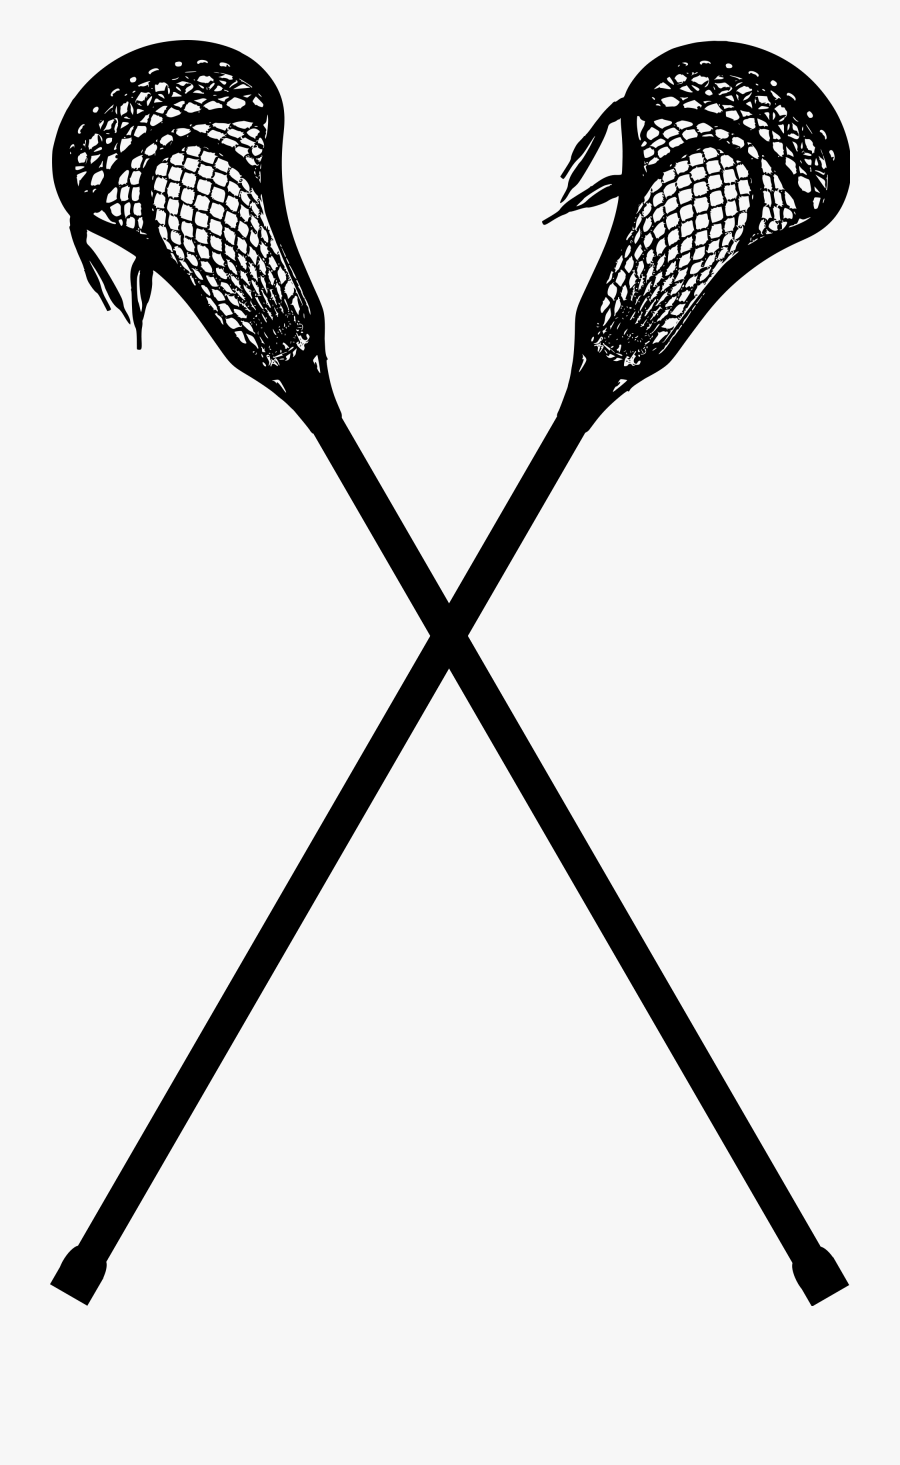 Crossed Lacrosse Sticks Skinny - Transparent Lacrosse Stick Clipart, Transparent Clipart